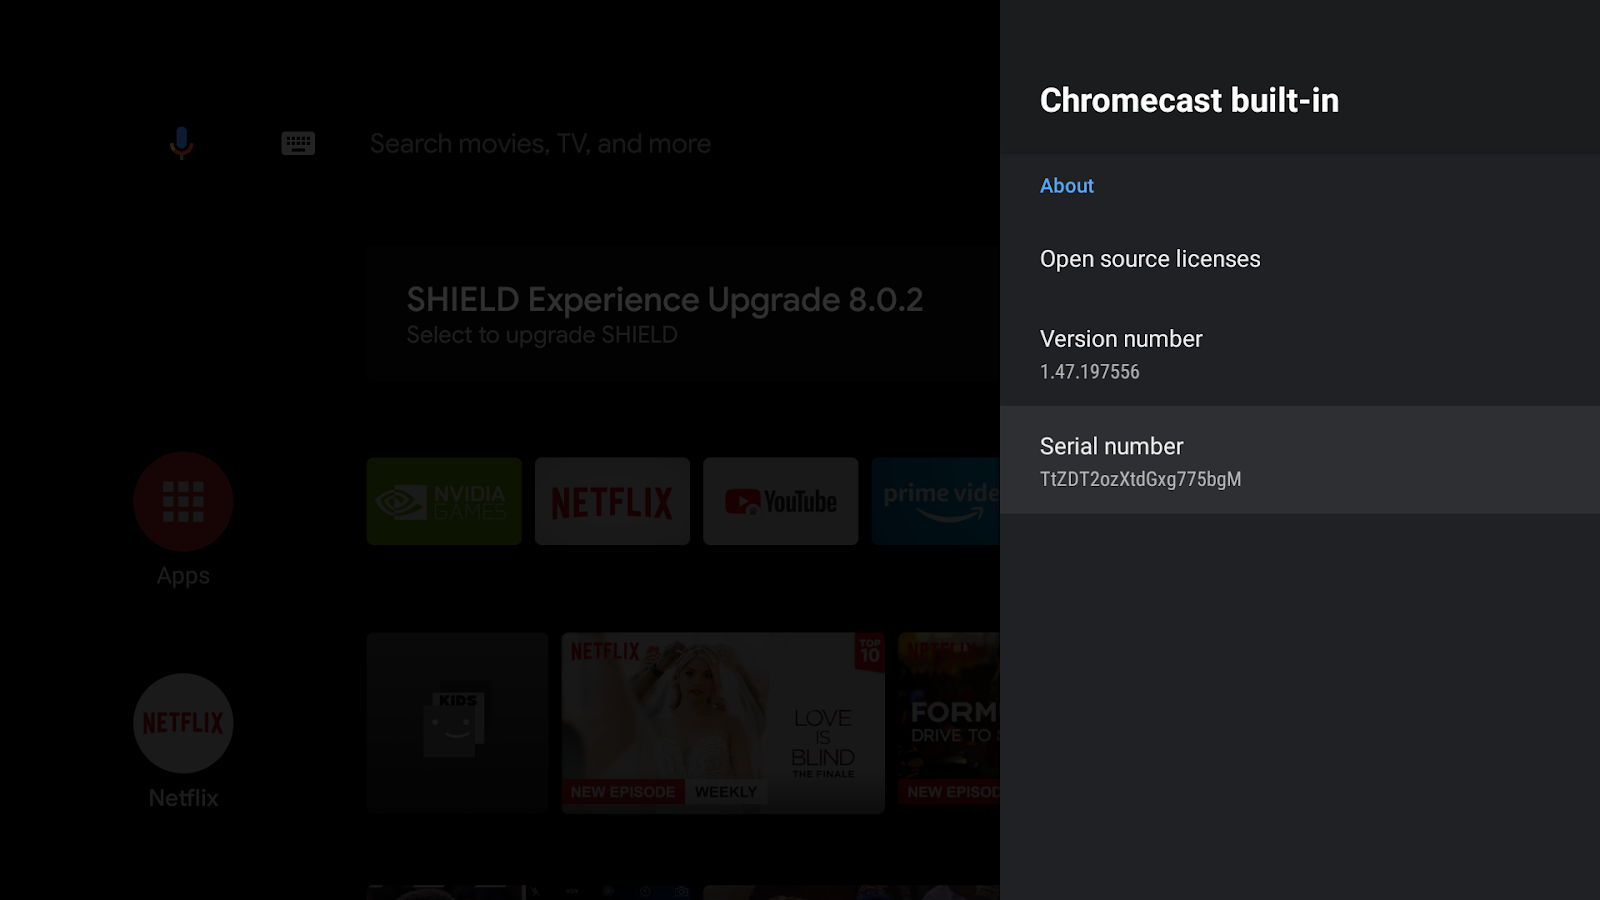 Android TV 螢幕顯示「內建 Chromecast」的畫面、版本編號和序號